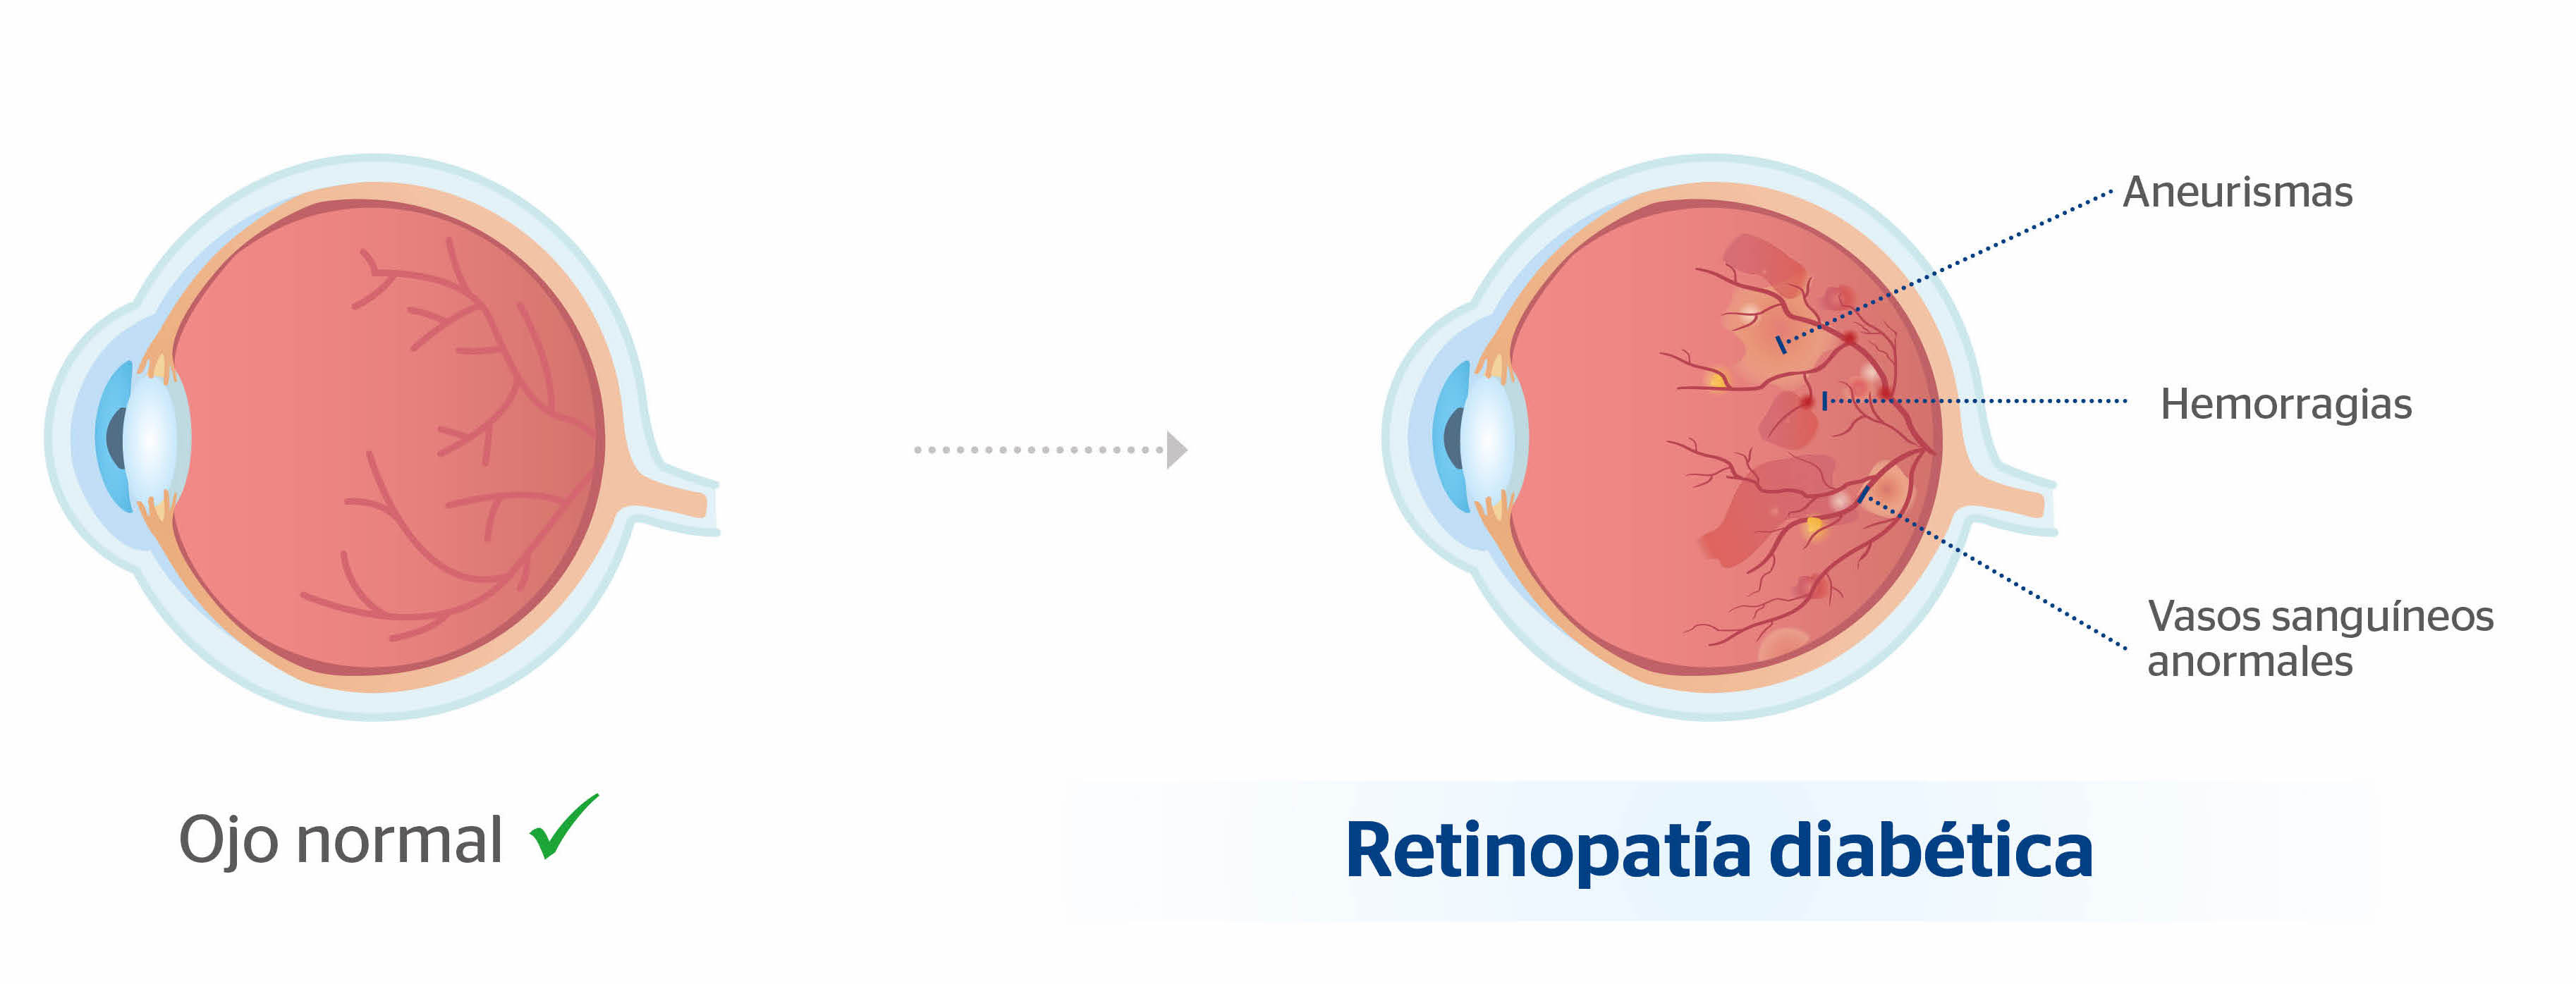 retinopatia diabetica no proliferativa tratamiento)